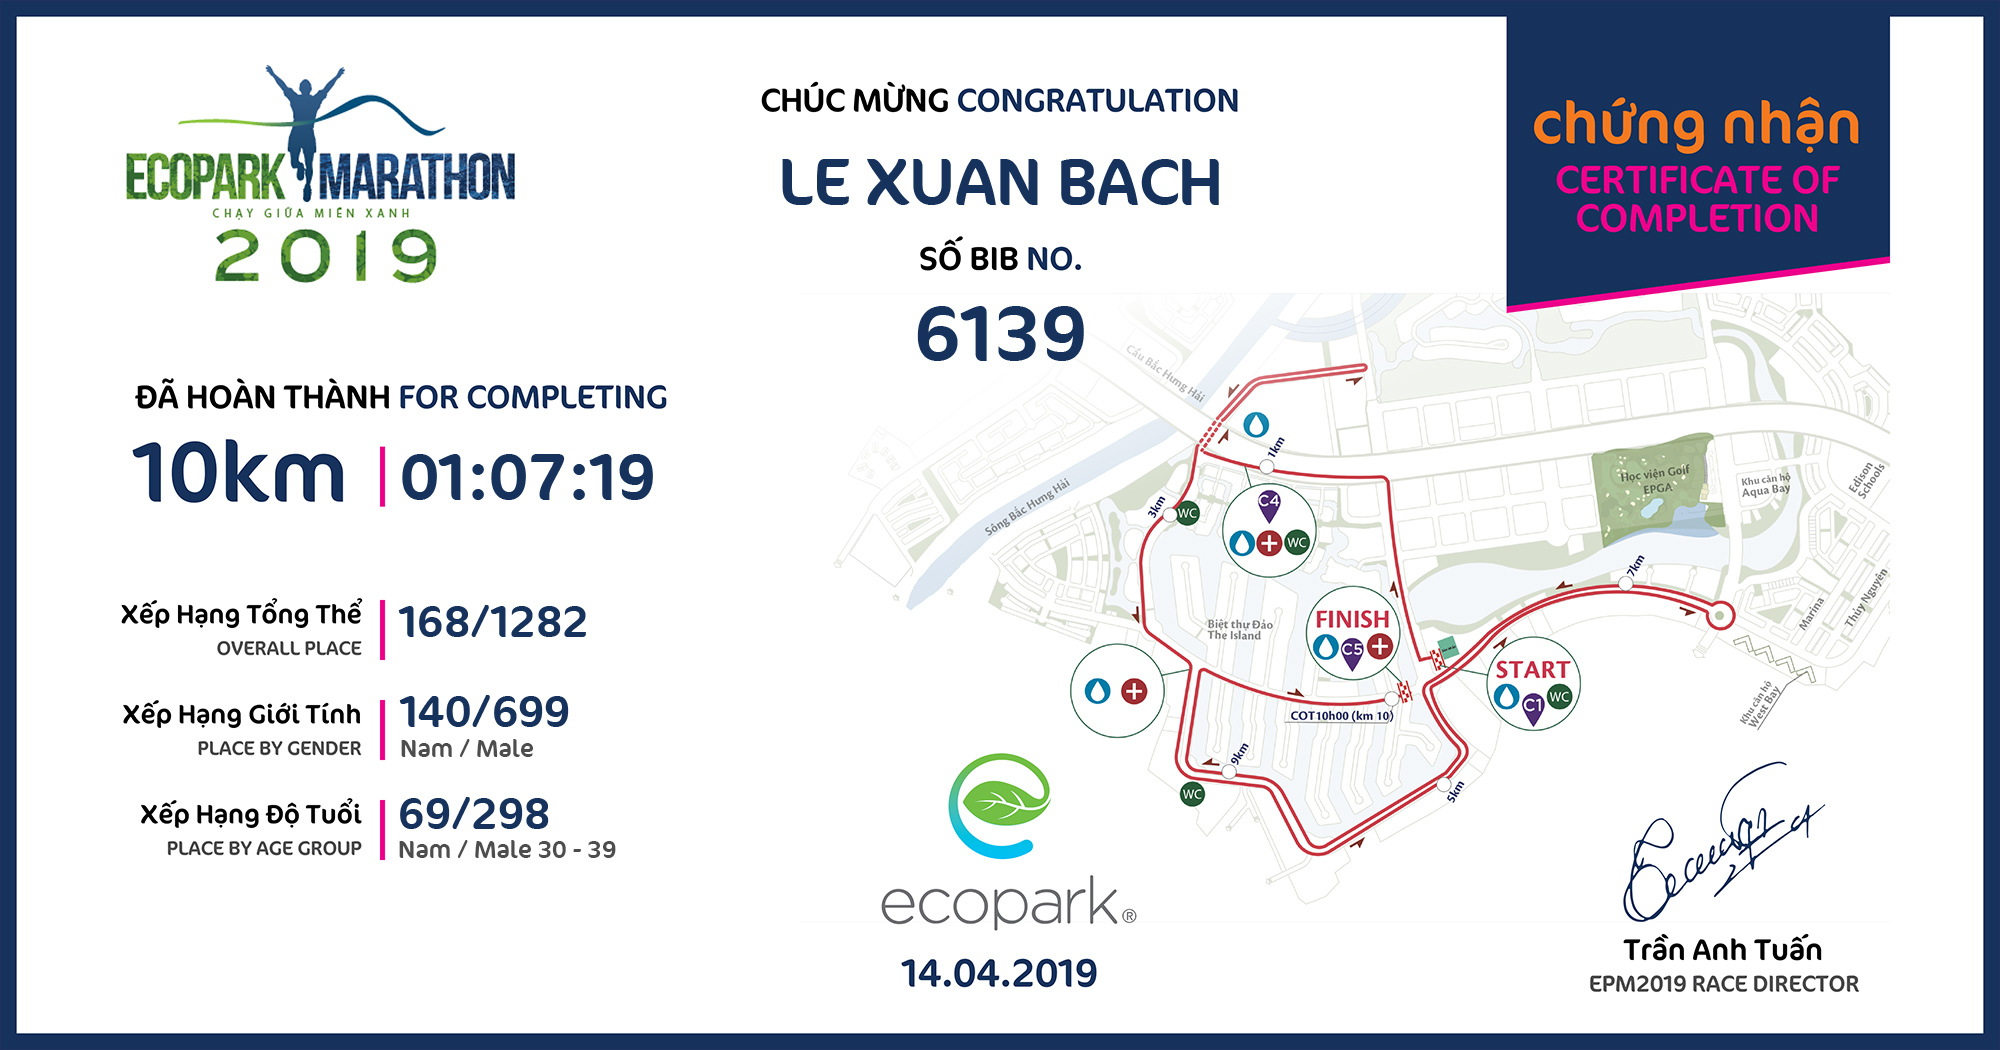 6139 - Le Xuan Bach